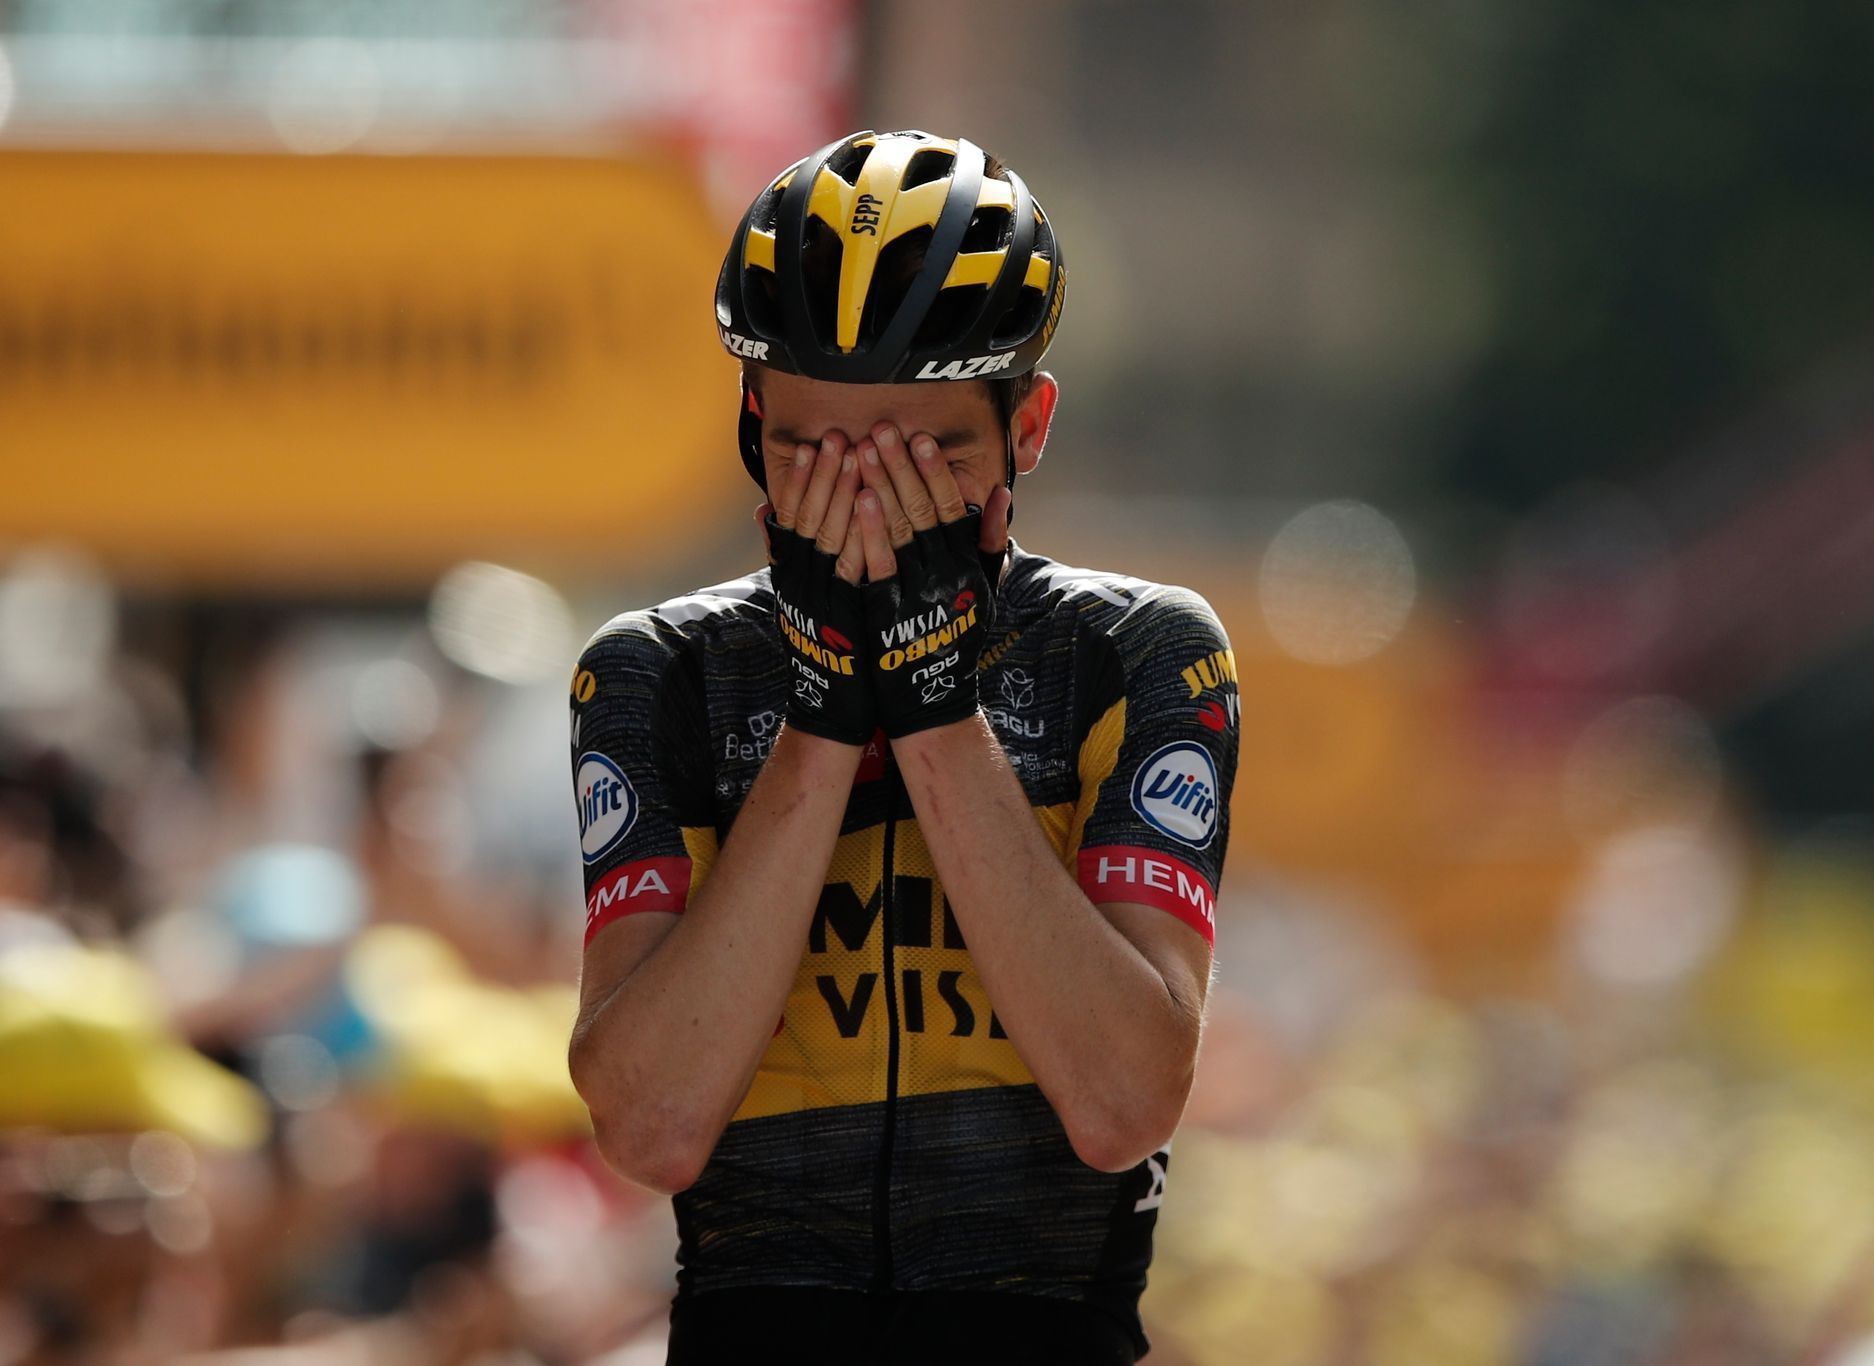 Sepp Kuss slaví triumf v 15. etapě Tour de France 2021